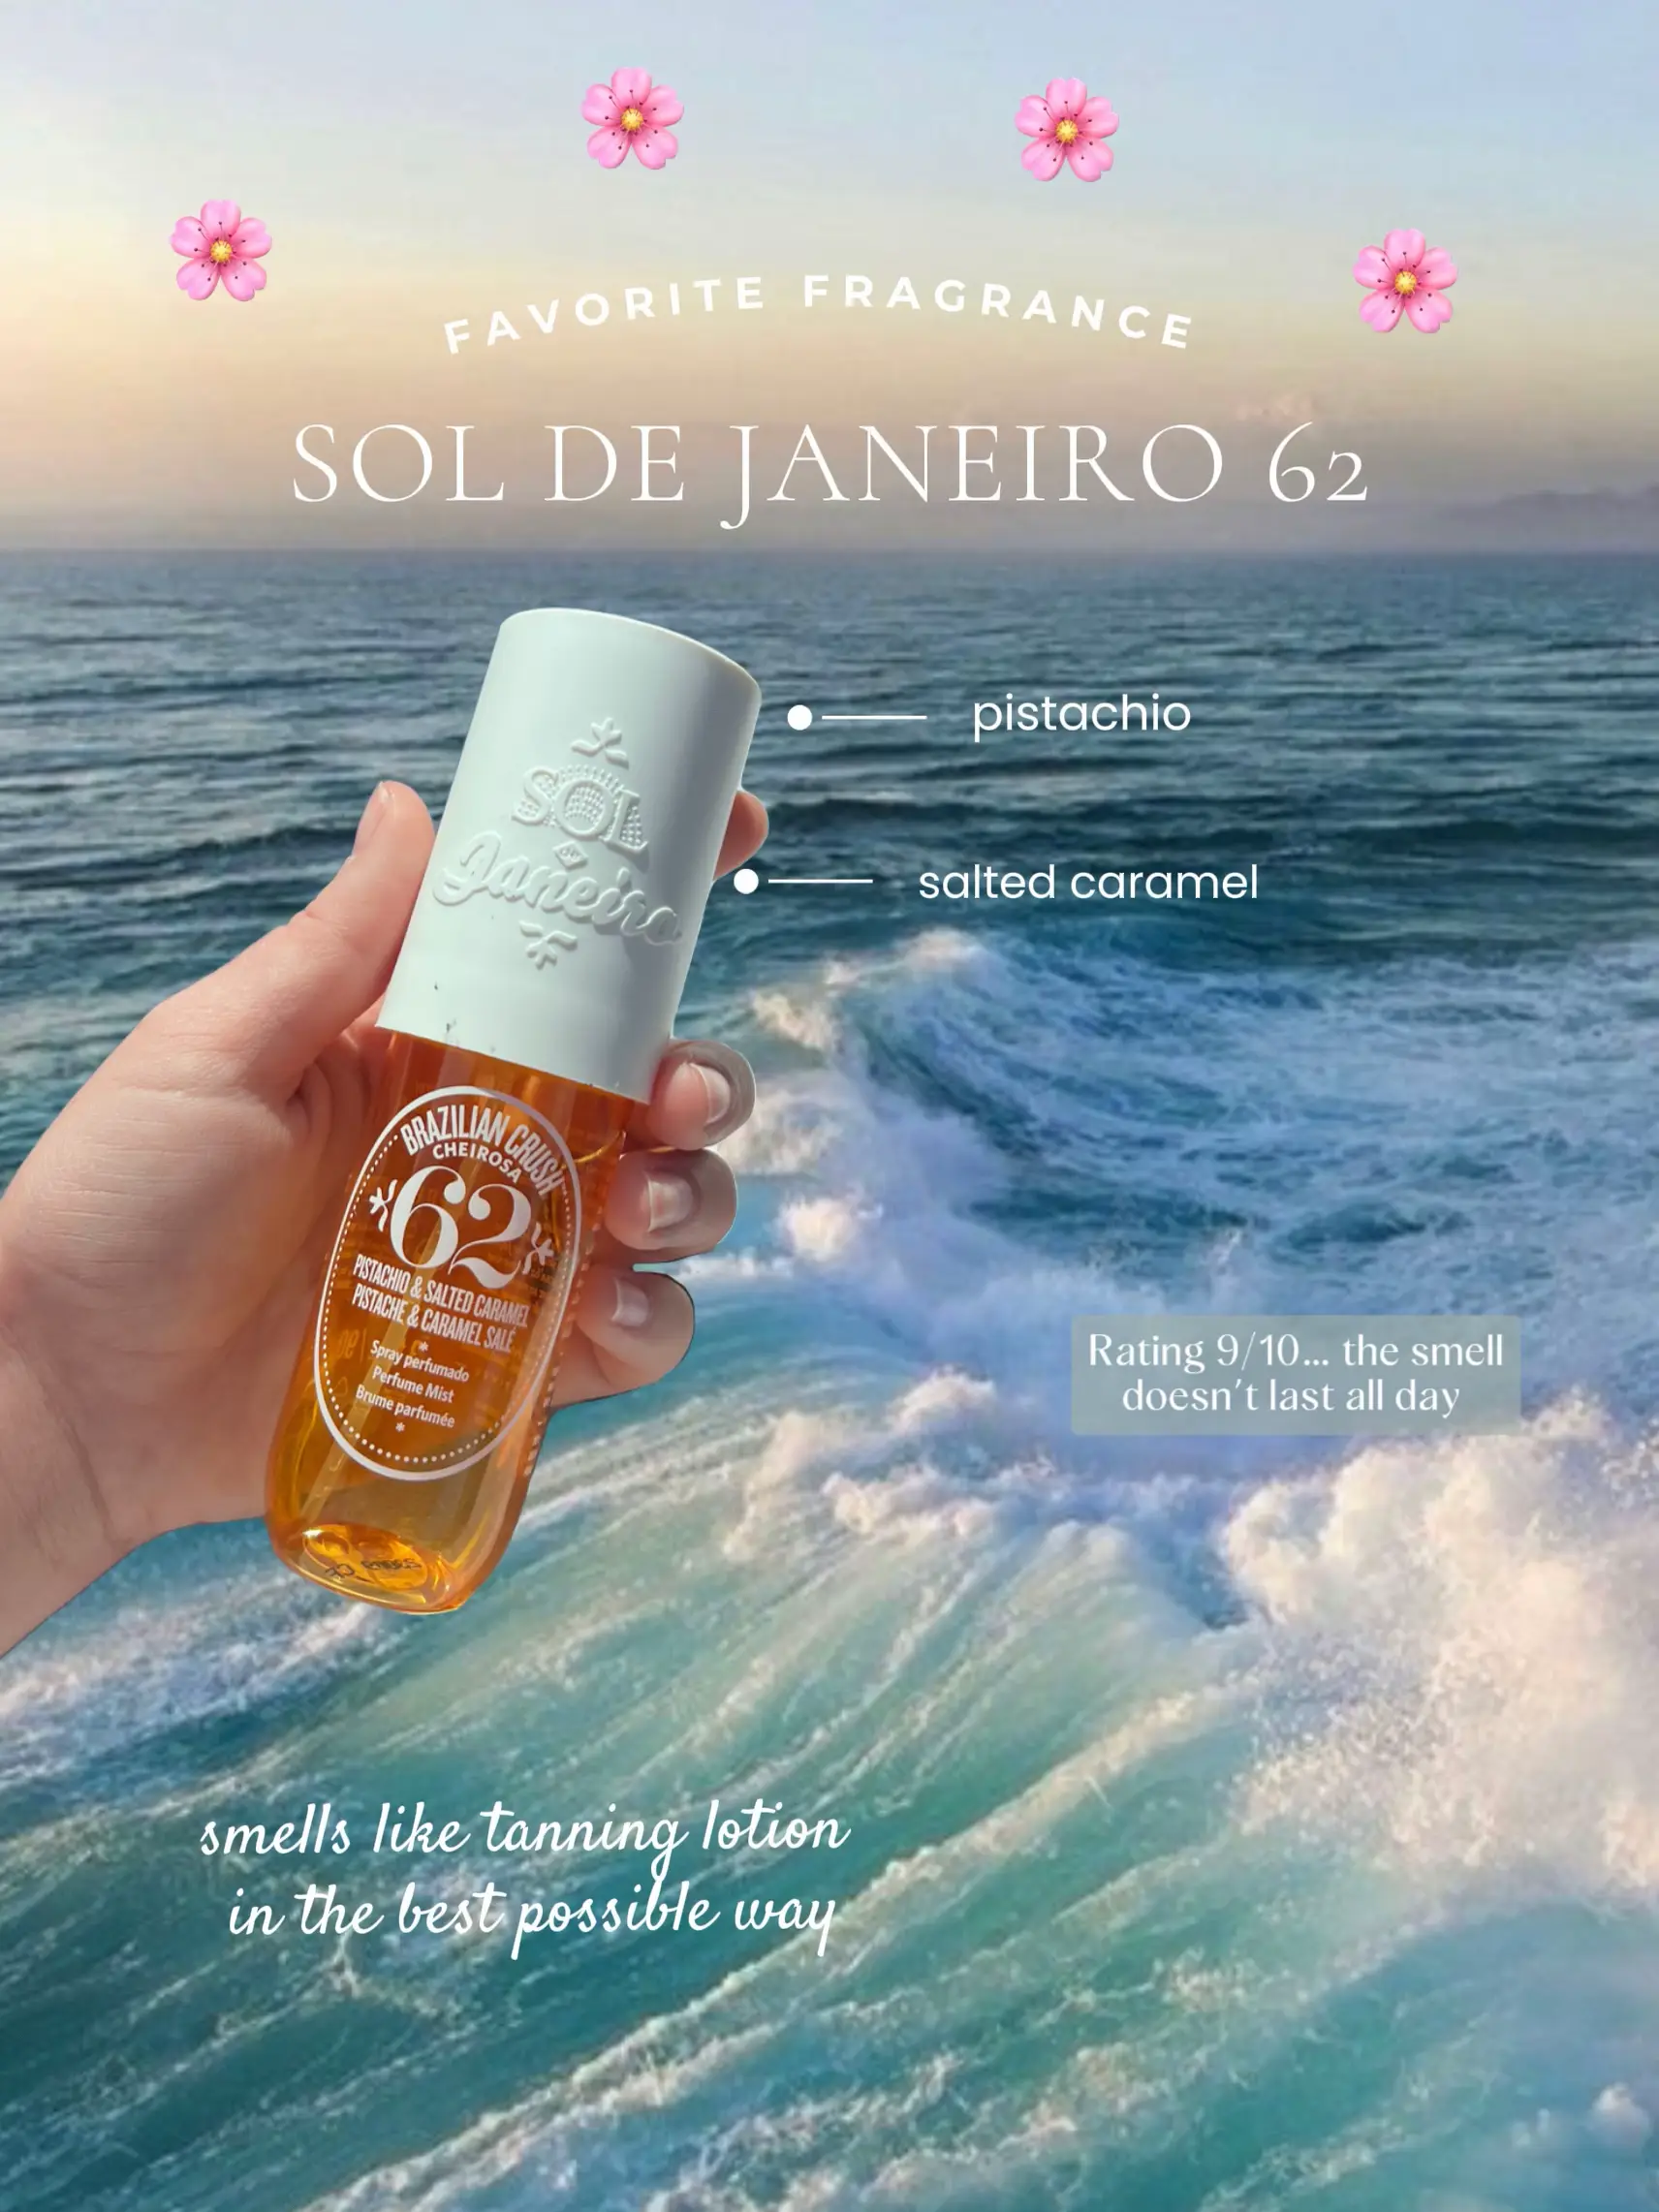 Sol de Janeiro's Best-Selling Deodorant Smells Like Pistachios and Caramel